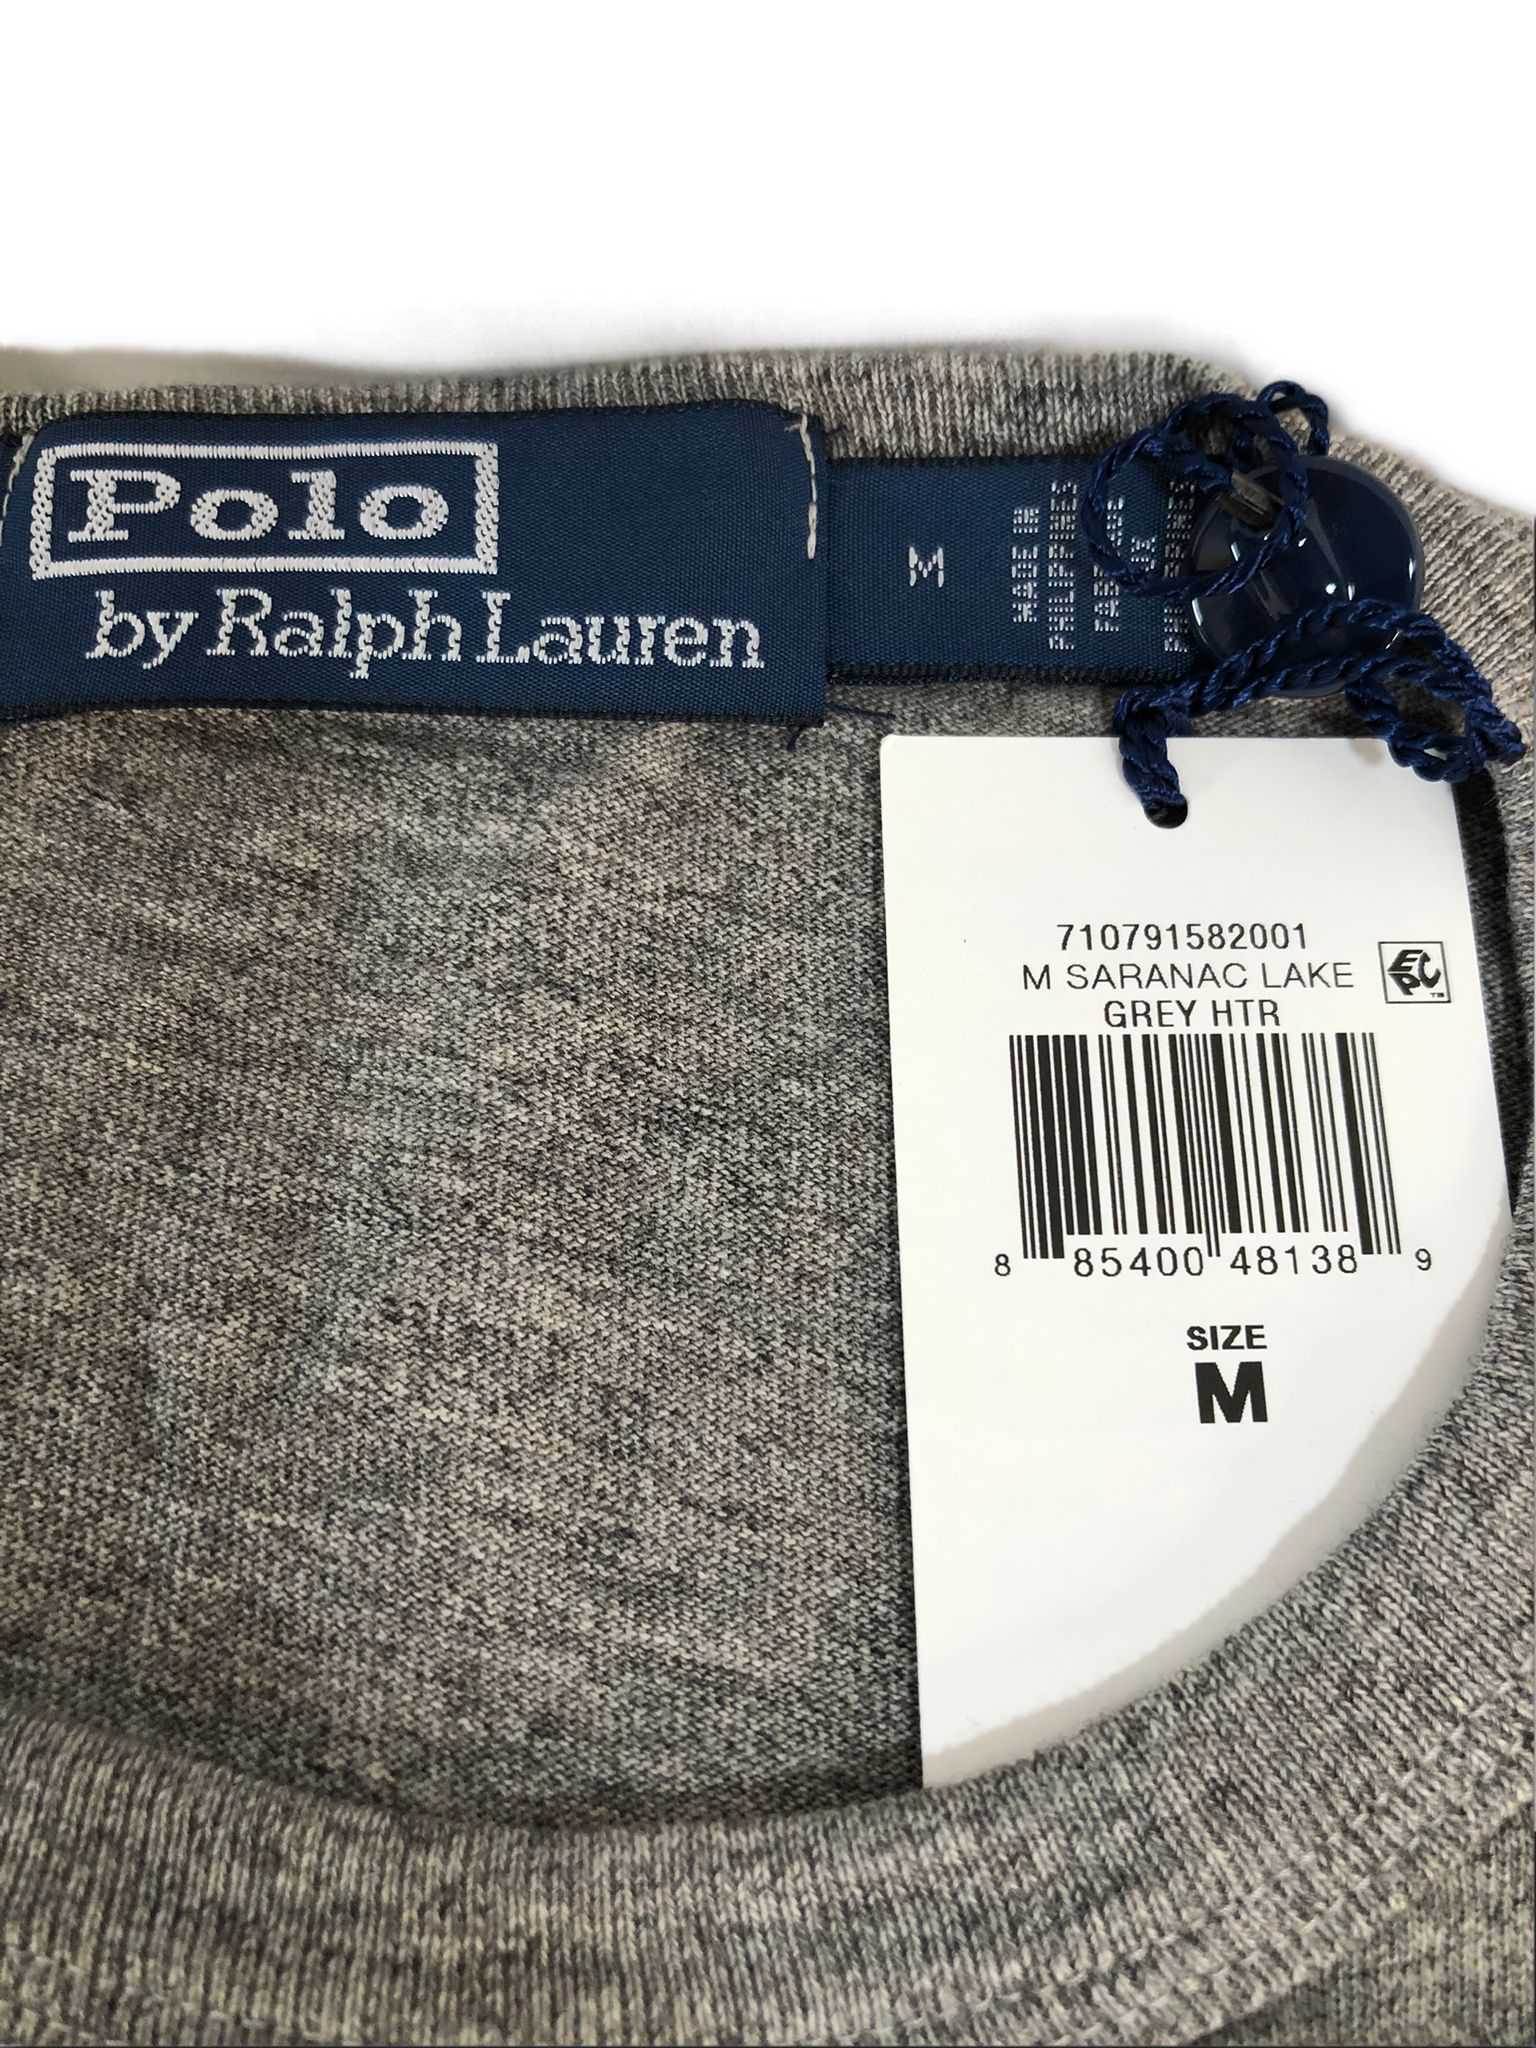 Polo Ralph Lauren Mens Custom Slim Fit Pine Valley Graphic T-Shirt